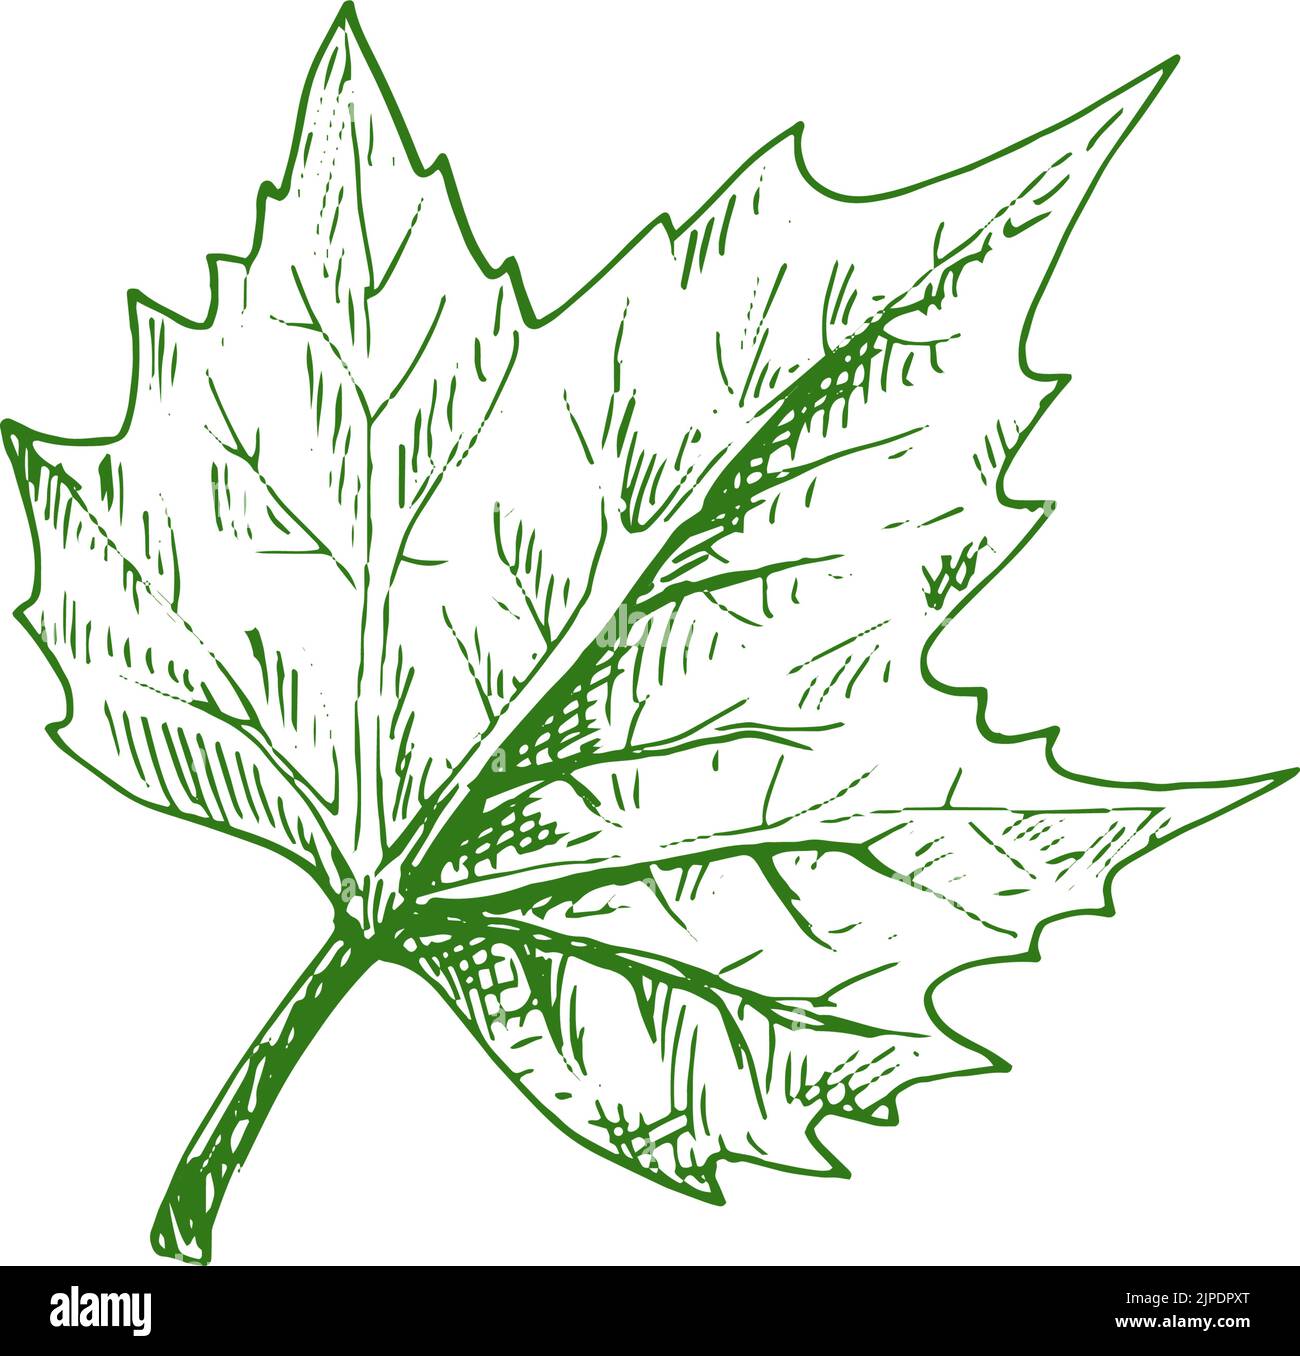 Maple Leaf Images - Free Download on Freepik